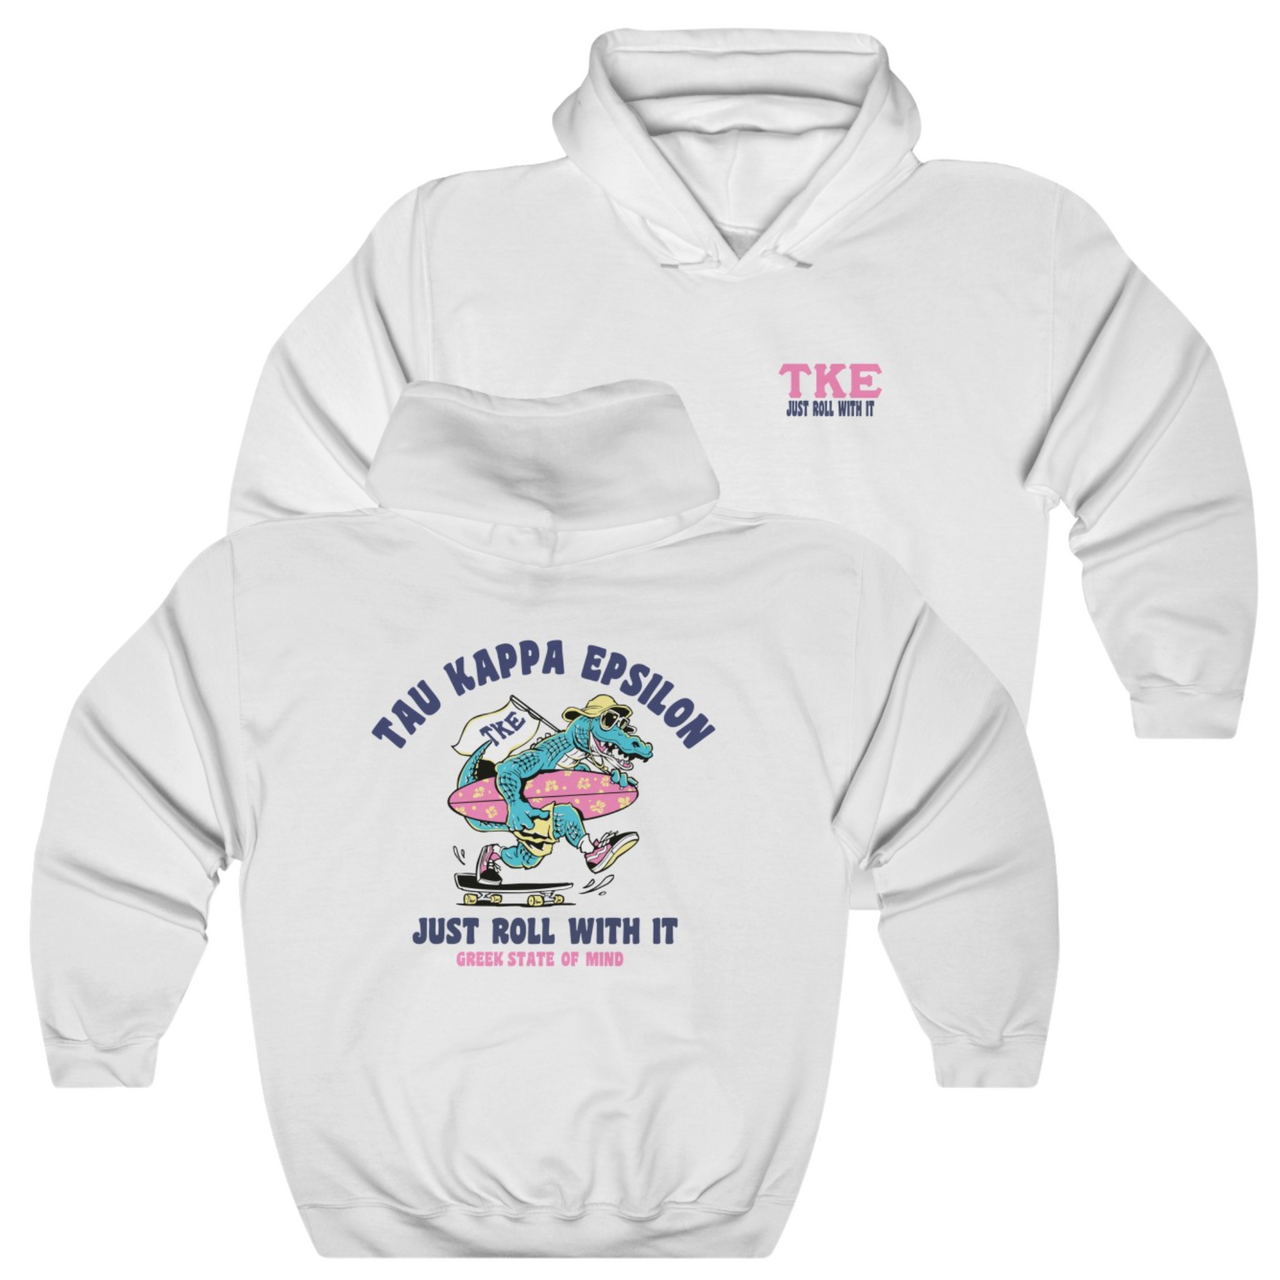 White Tau Kappa Epsilon Graphic Hoodie | Alligator Skater | TKE Clothing and Merchandise